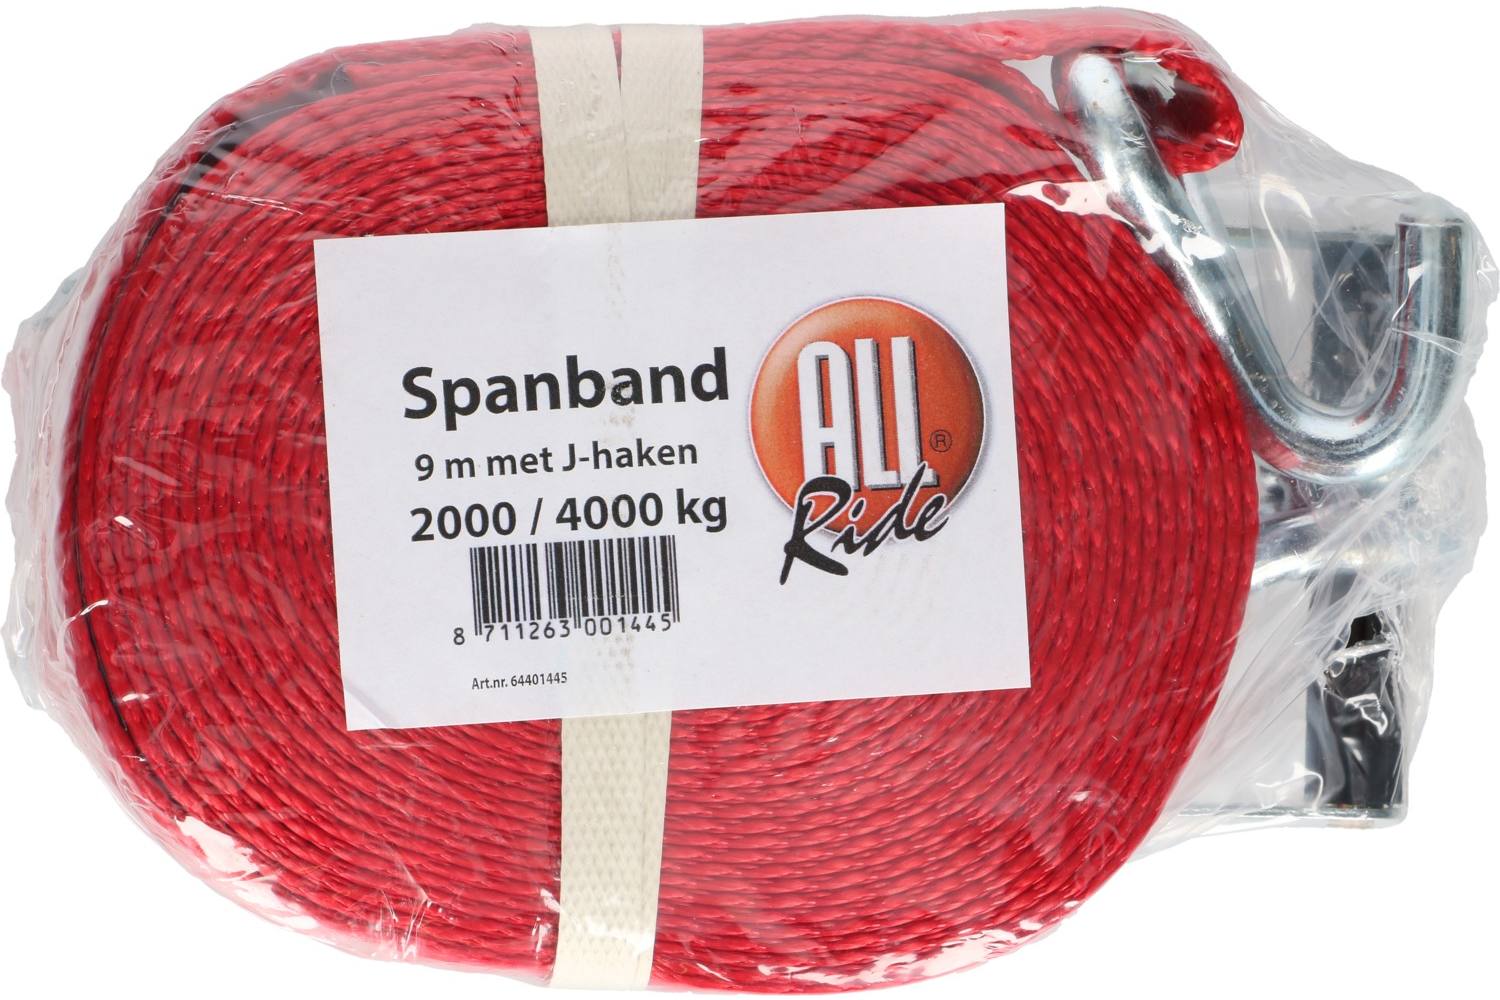 Spanband, AllRide, l 9m, met 2 haken, 2000-4000kg 2